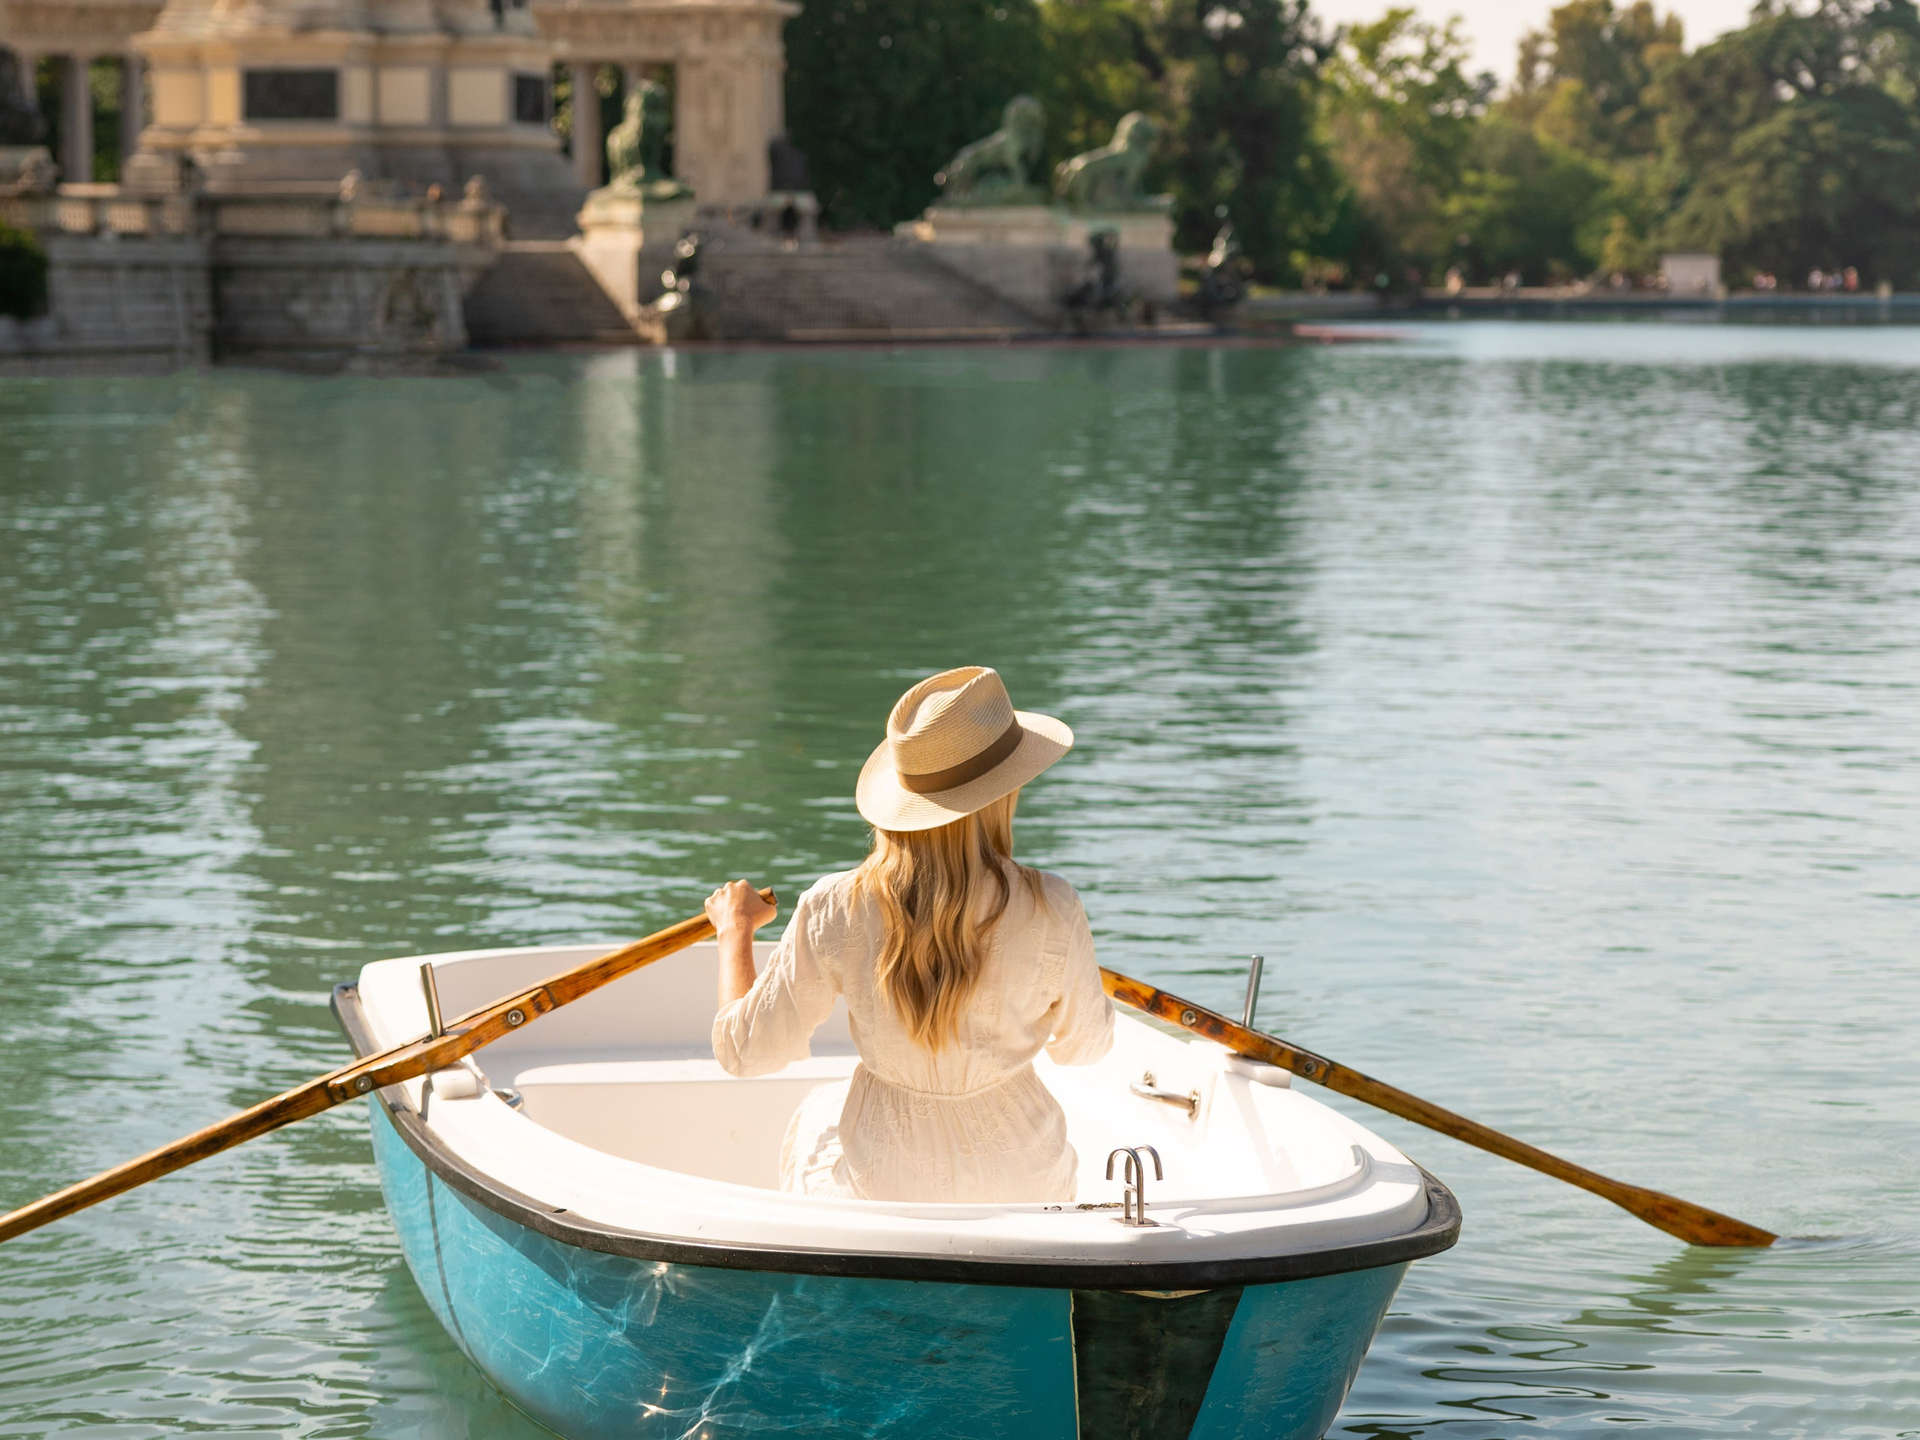 Woman rows a boat on the lake at El Retiro, Madrid.